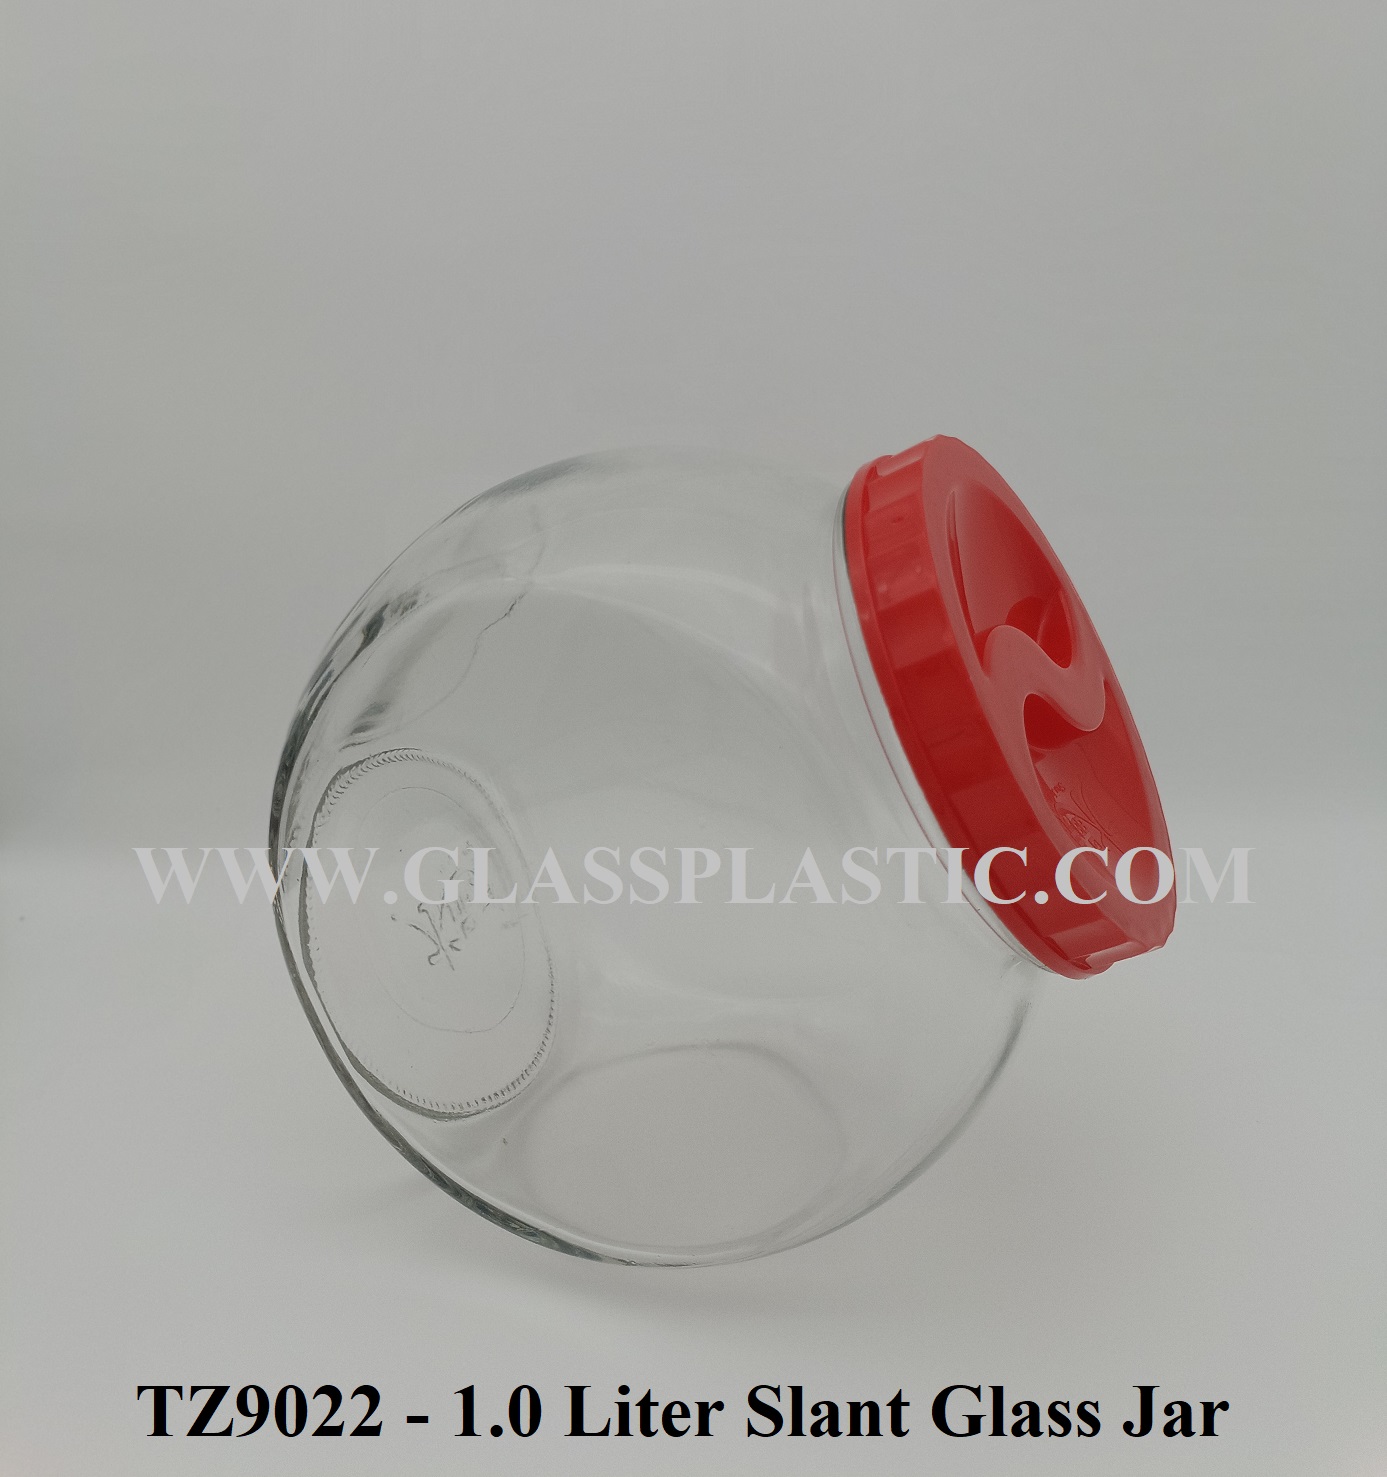 1.0 Liter Slant Glass Jar